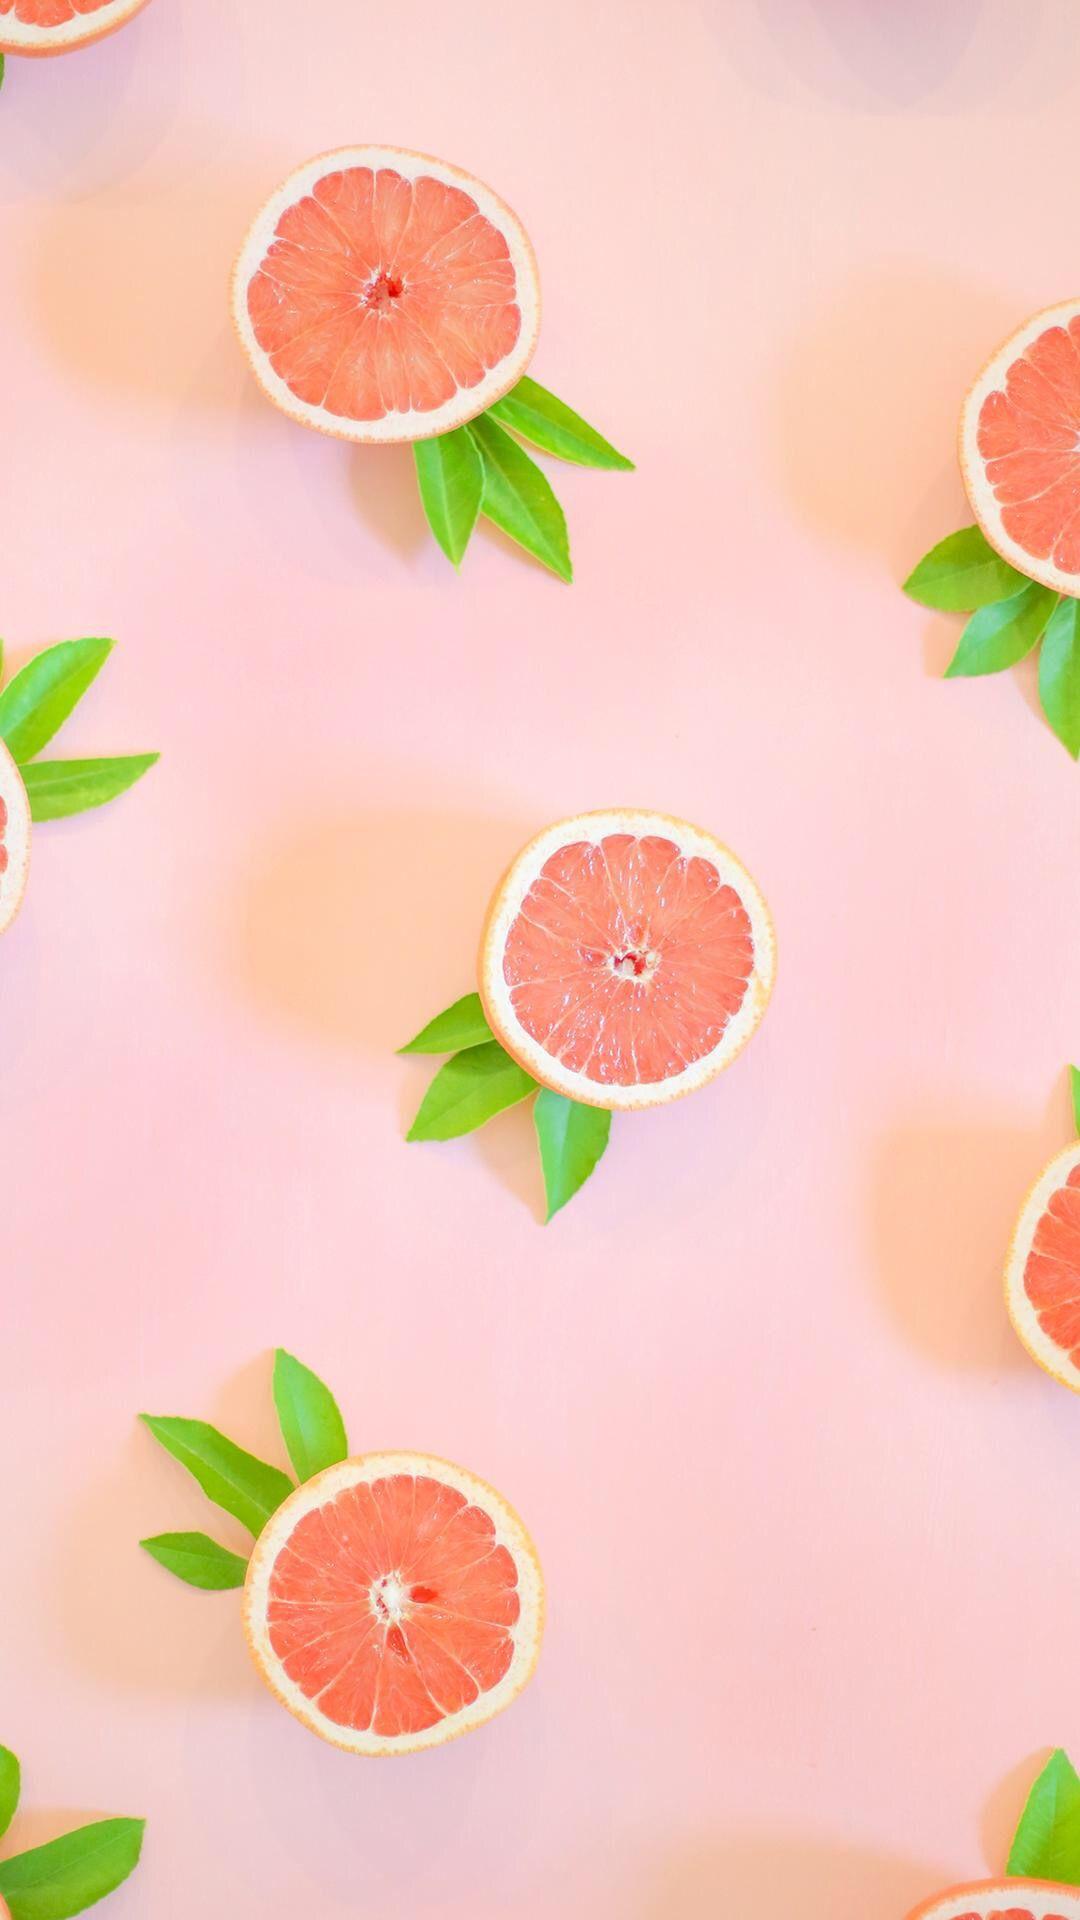 Grapefruit pattern iPhone wallpaper. iPhone Wallpaper in 2019